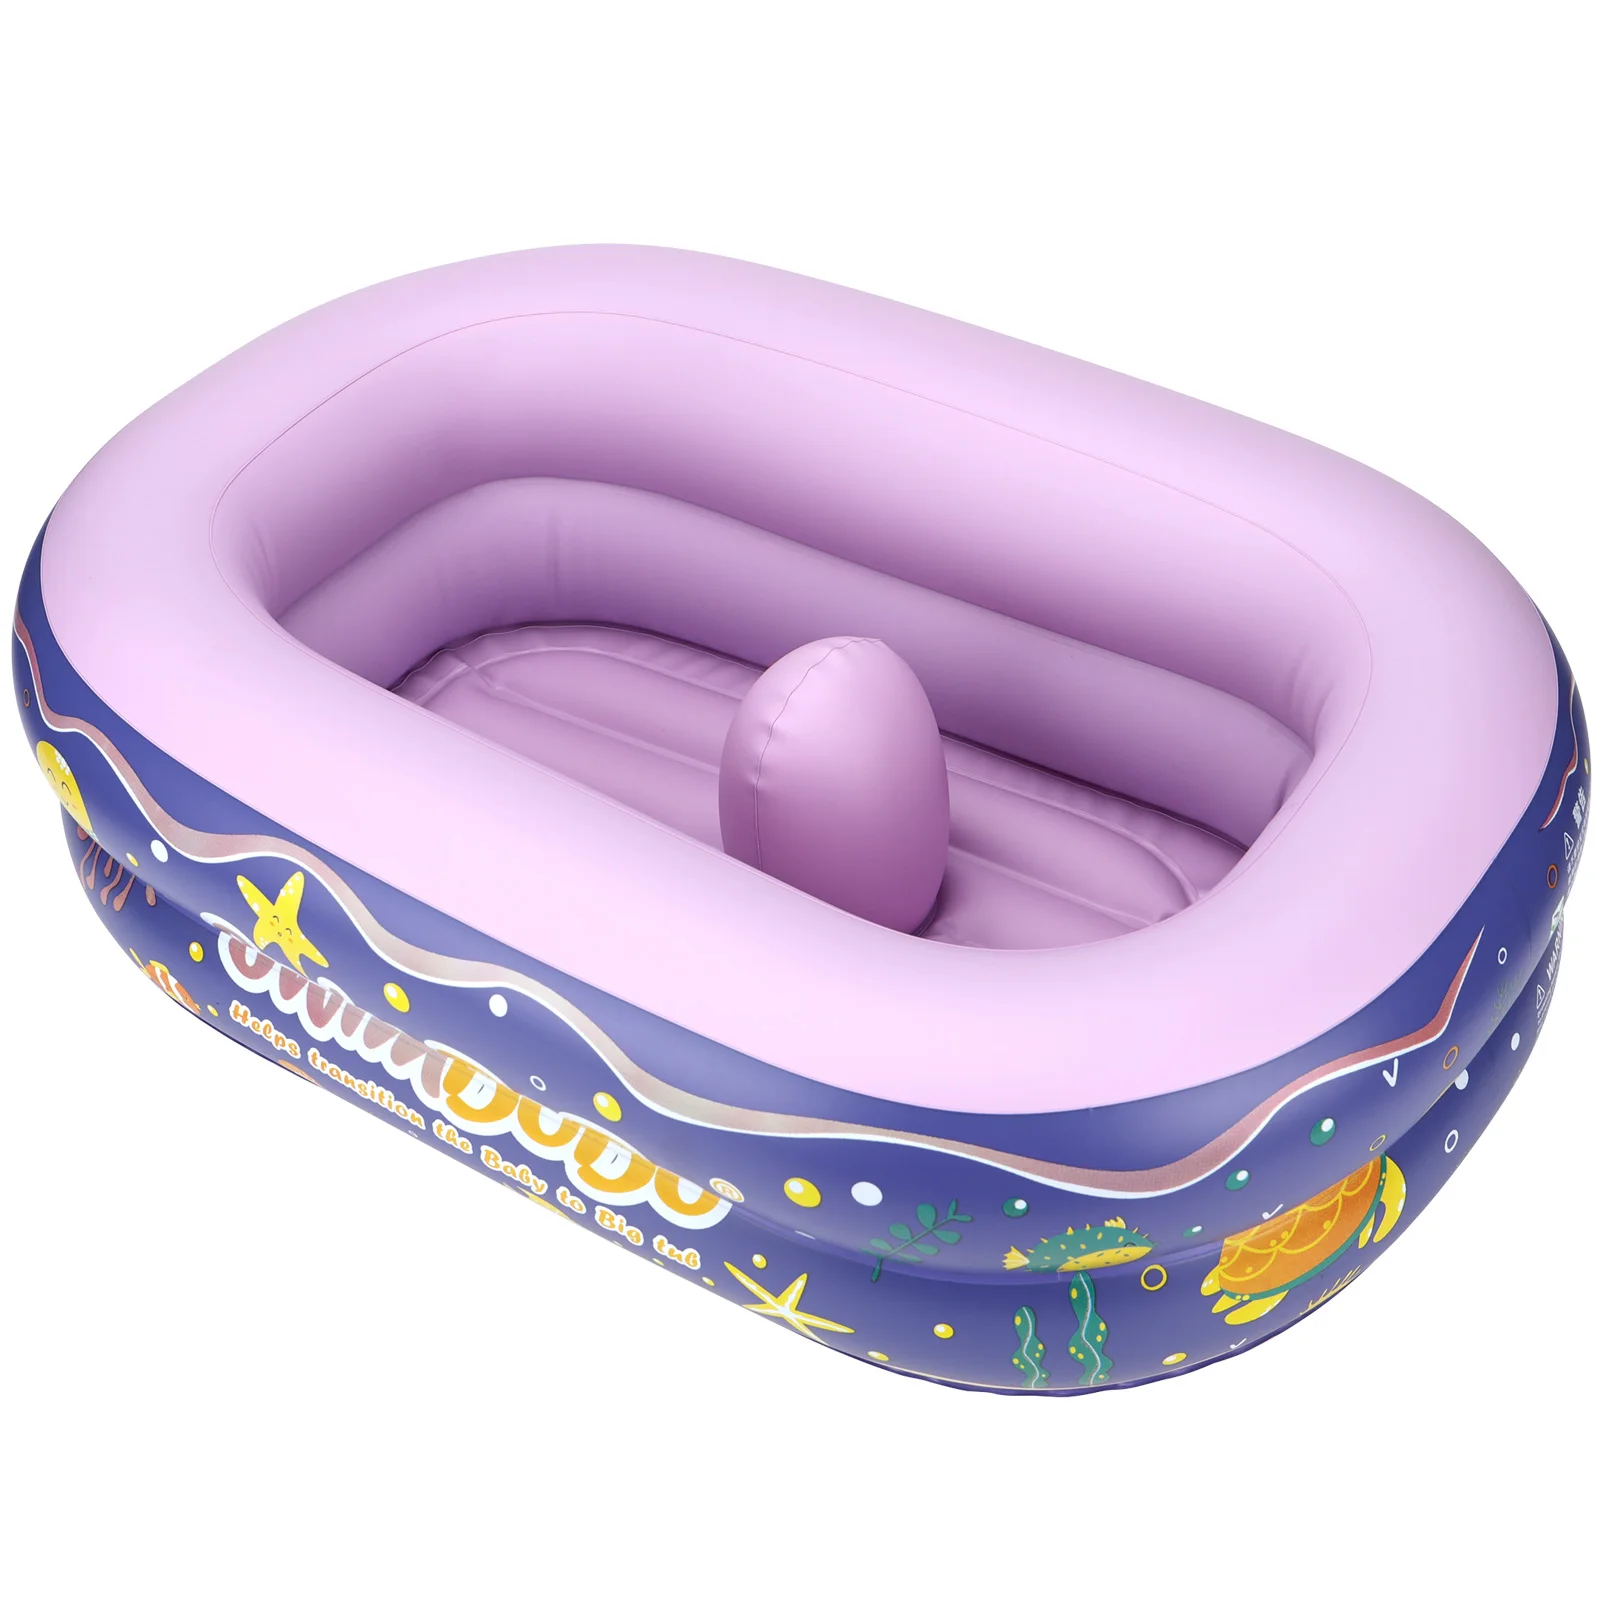 Inflatable Baby Swimming Pool Eco-Friendly PVC Portable Children Bath Tub 